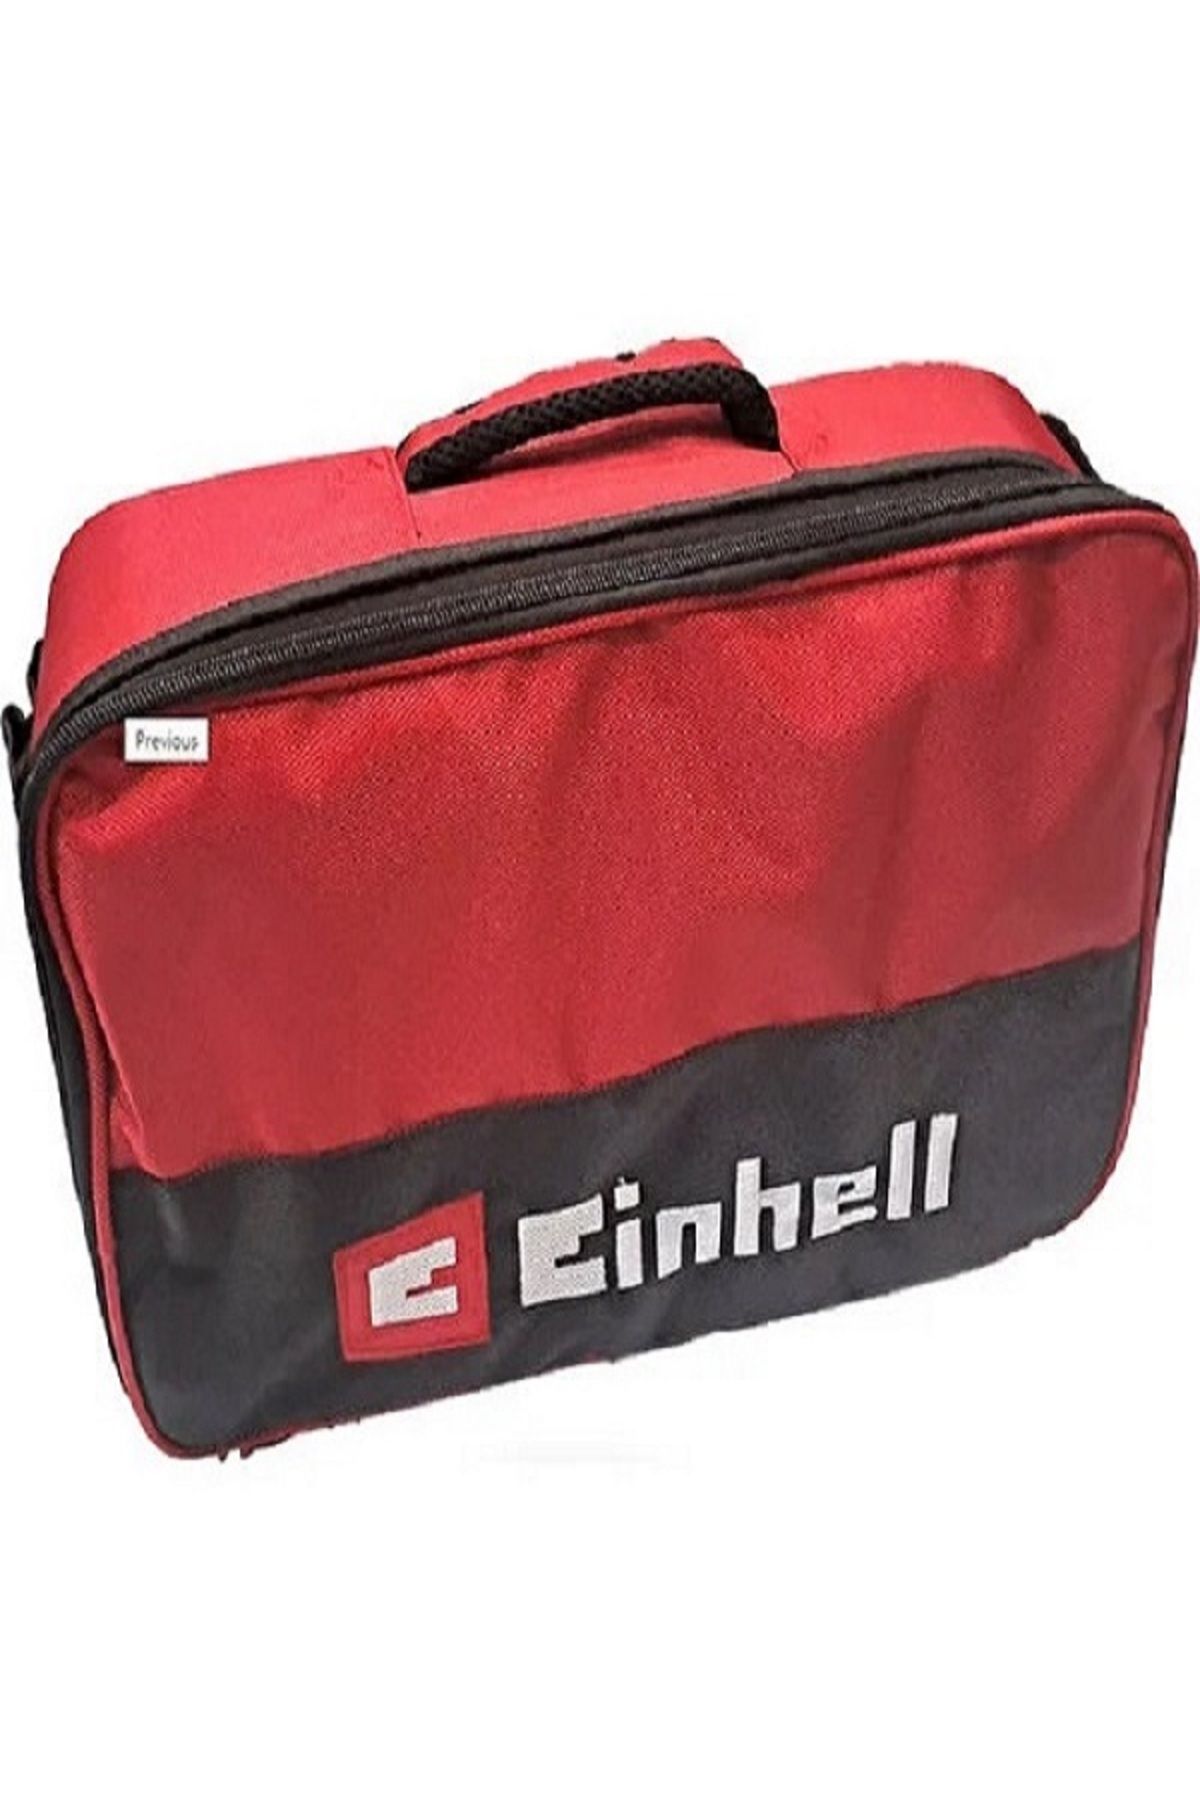 Einhell Bez Kulplu Taşınabilir Takım Çantası Kırmızı-Siyah 10x25x40cm